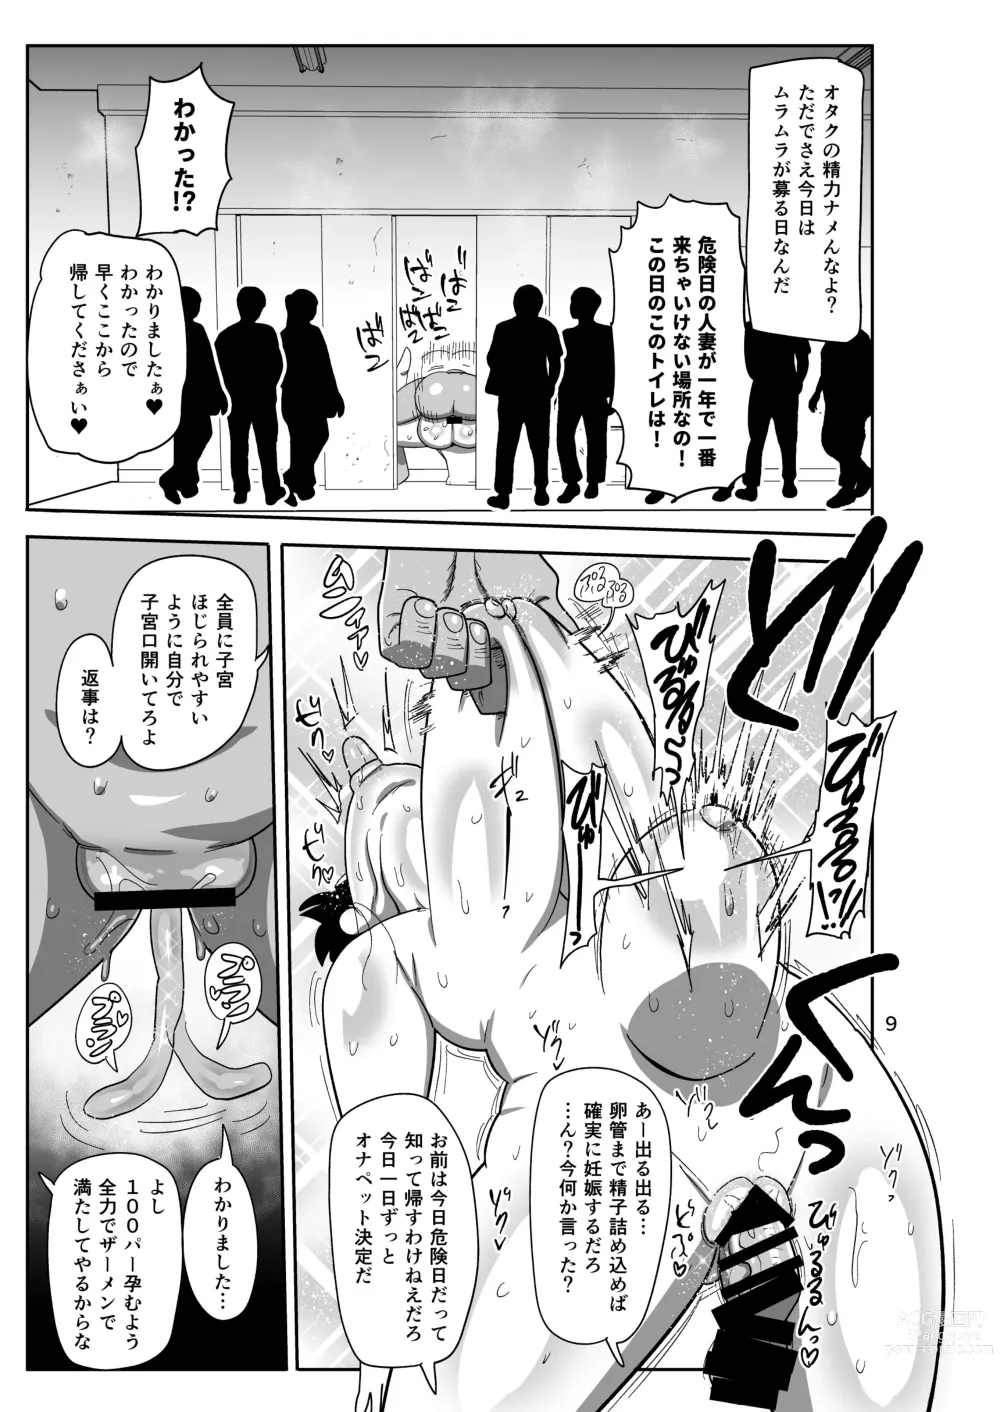 Page 9 of doujinshi Arai-san komike niiku